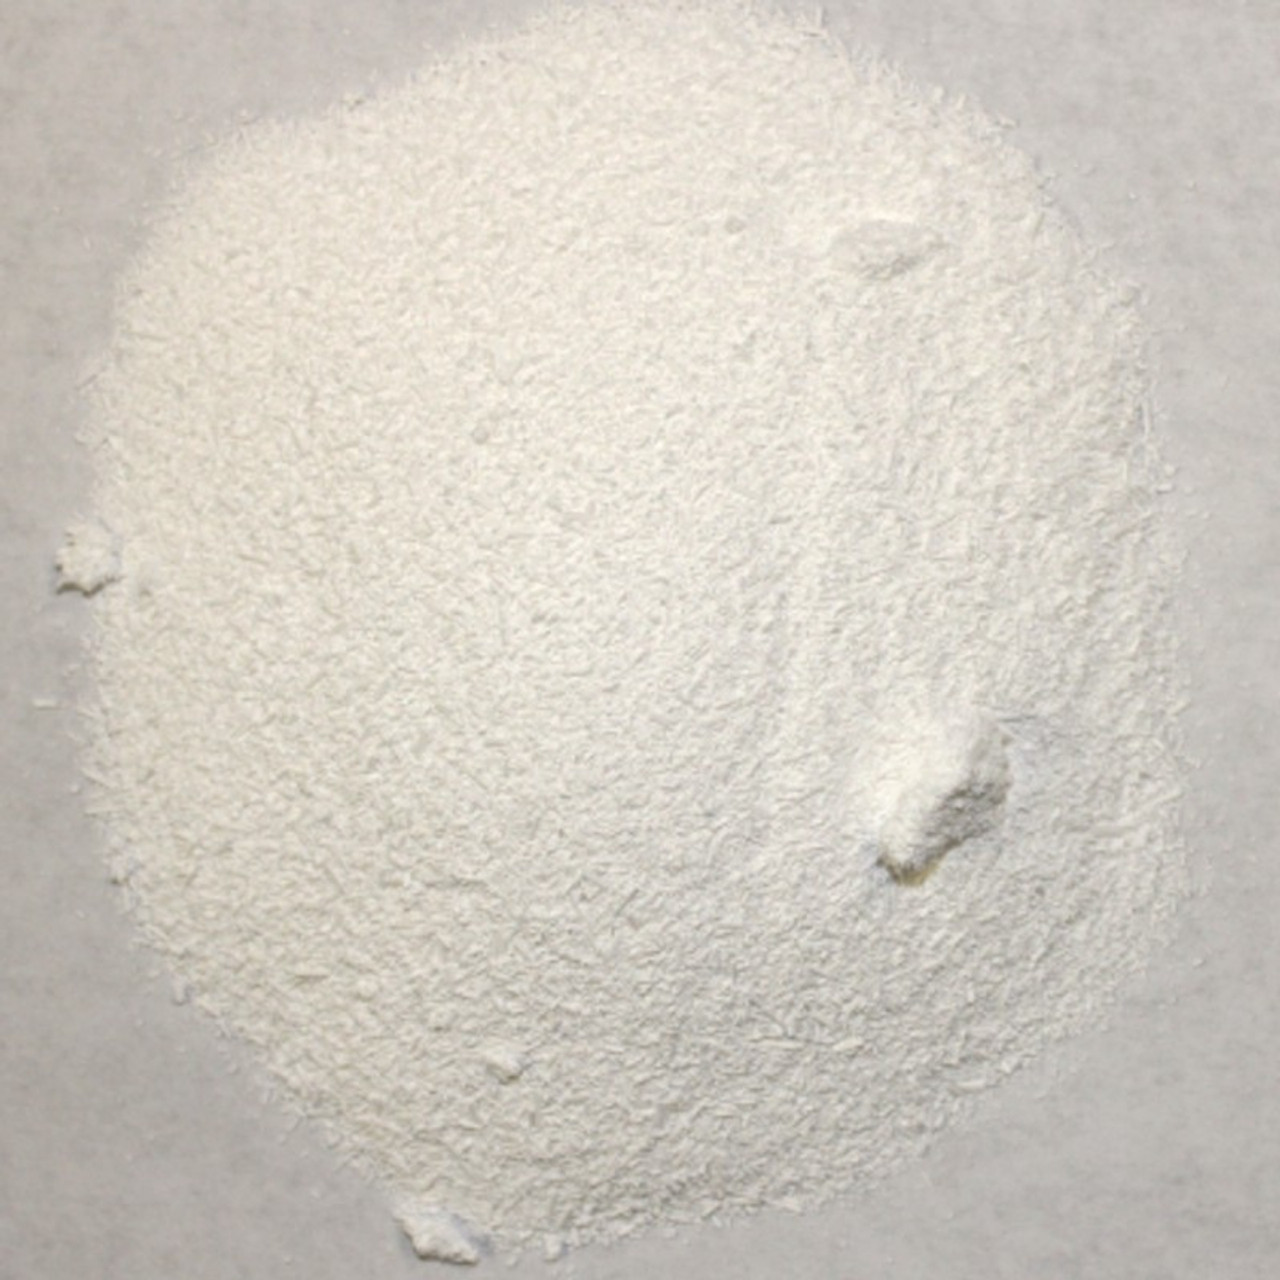 Buy Bulk Sodium Carbonate Wholesale Online